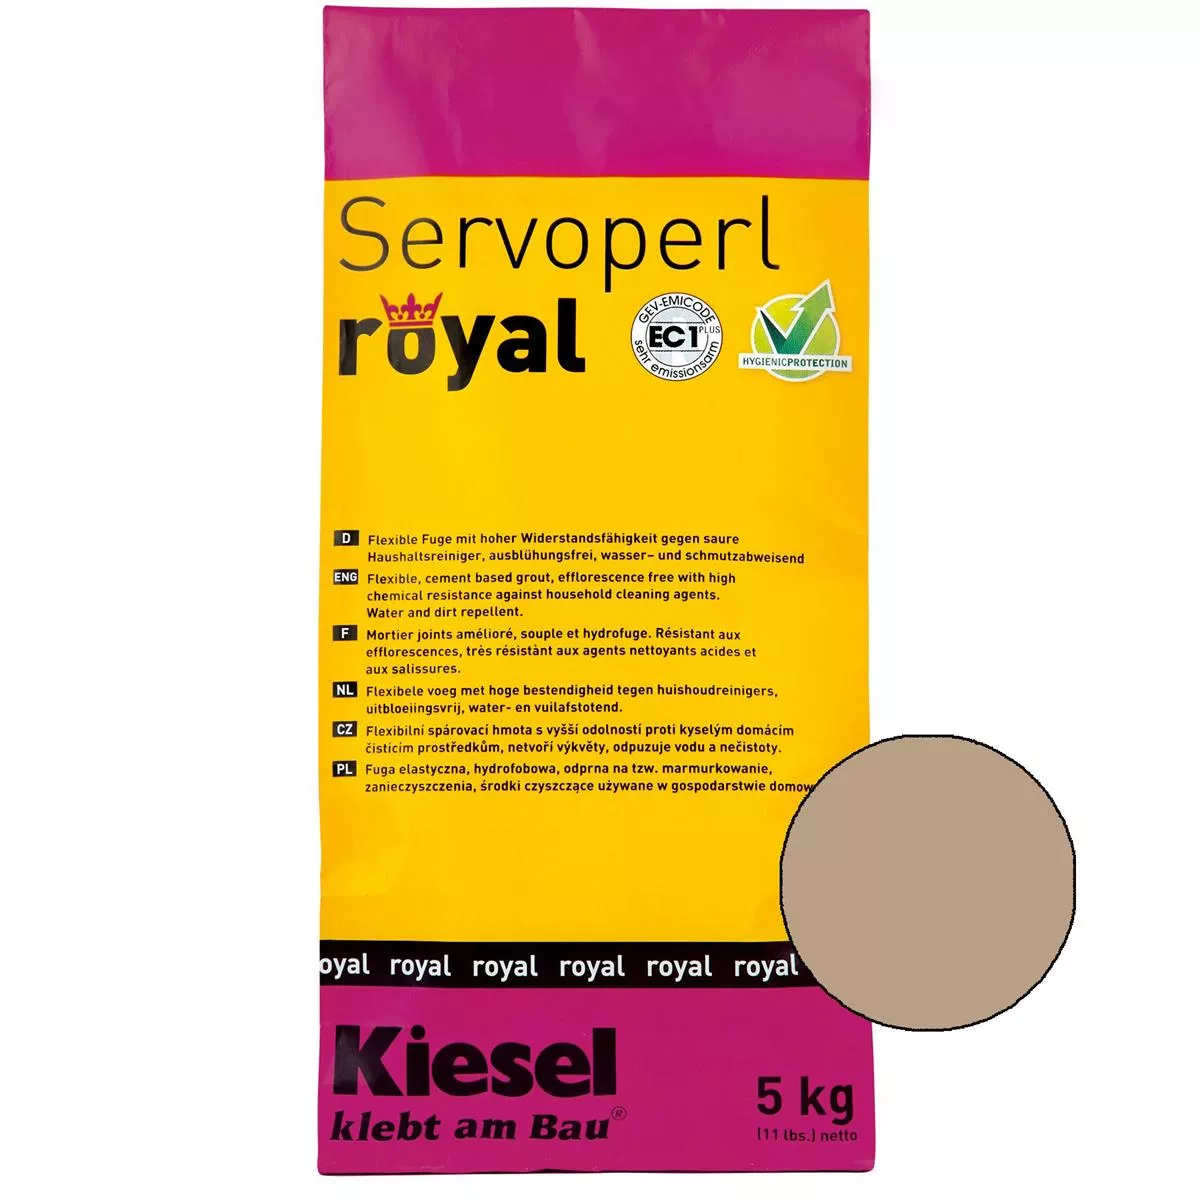 Kiesel Servoperl royal - fuga keverék - 5 kg sivatagi homok